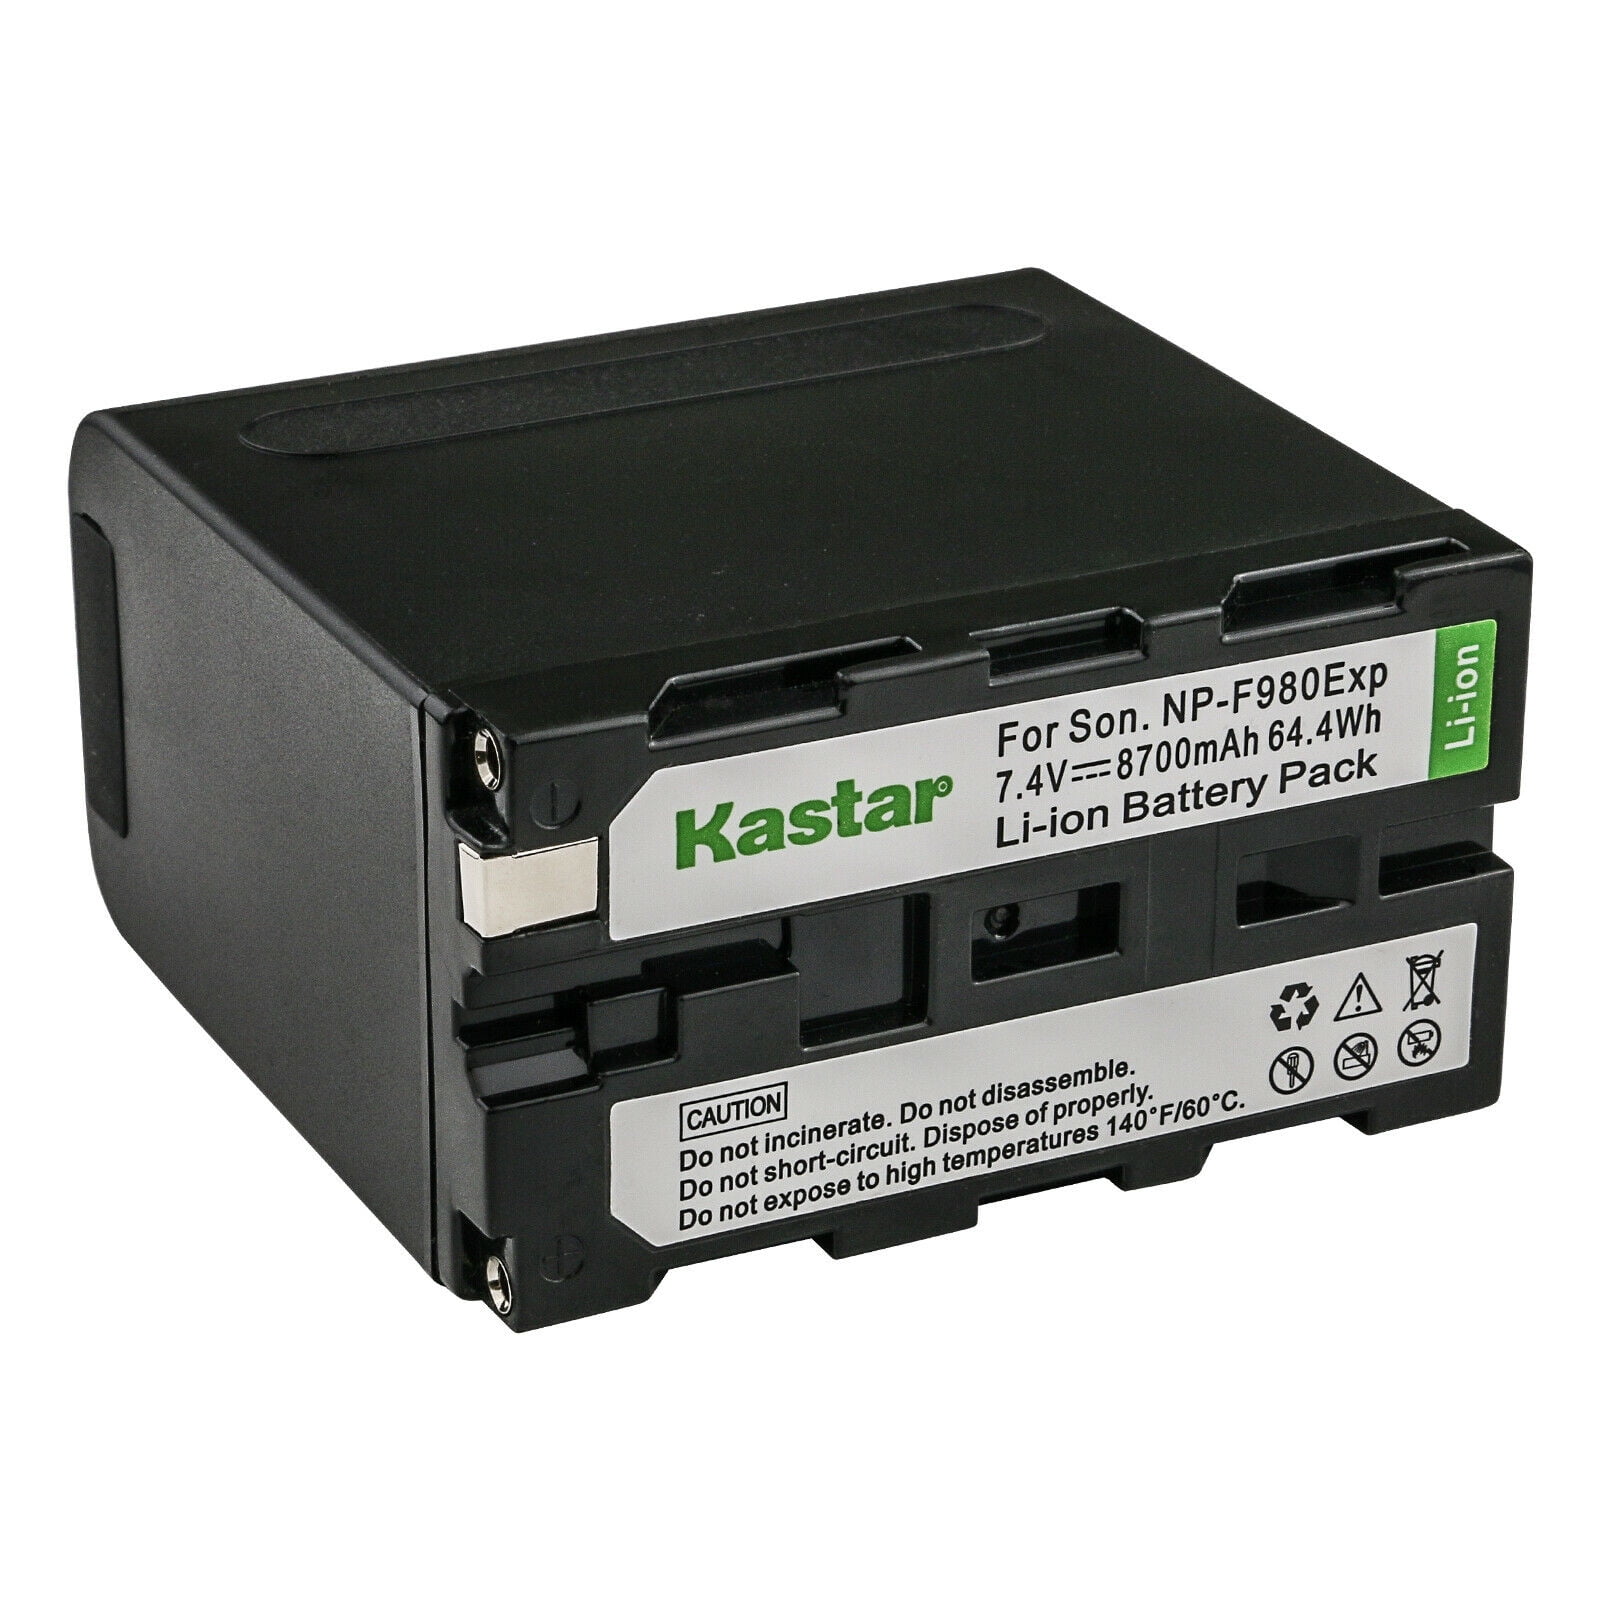 Kastar NP-F980EXP LCD AC Battery Charger Compatible with Sony MVC-CHF81 MVC-CKF81 MVC-FD100 MVC-FD200 MVC-FD5 MVC-FD51 MVC-FD7 MVC-FD71 MVC-FD73 MVC-FD75 MVC-FD81 MVC-FD83